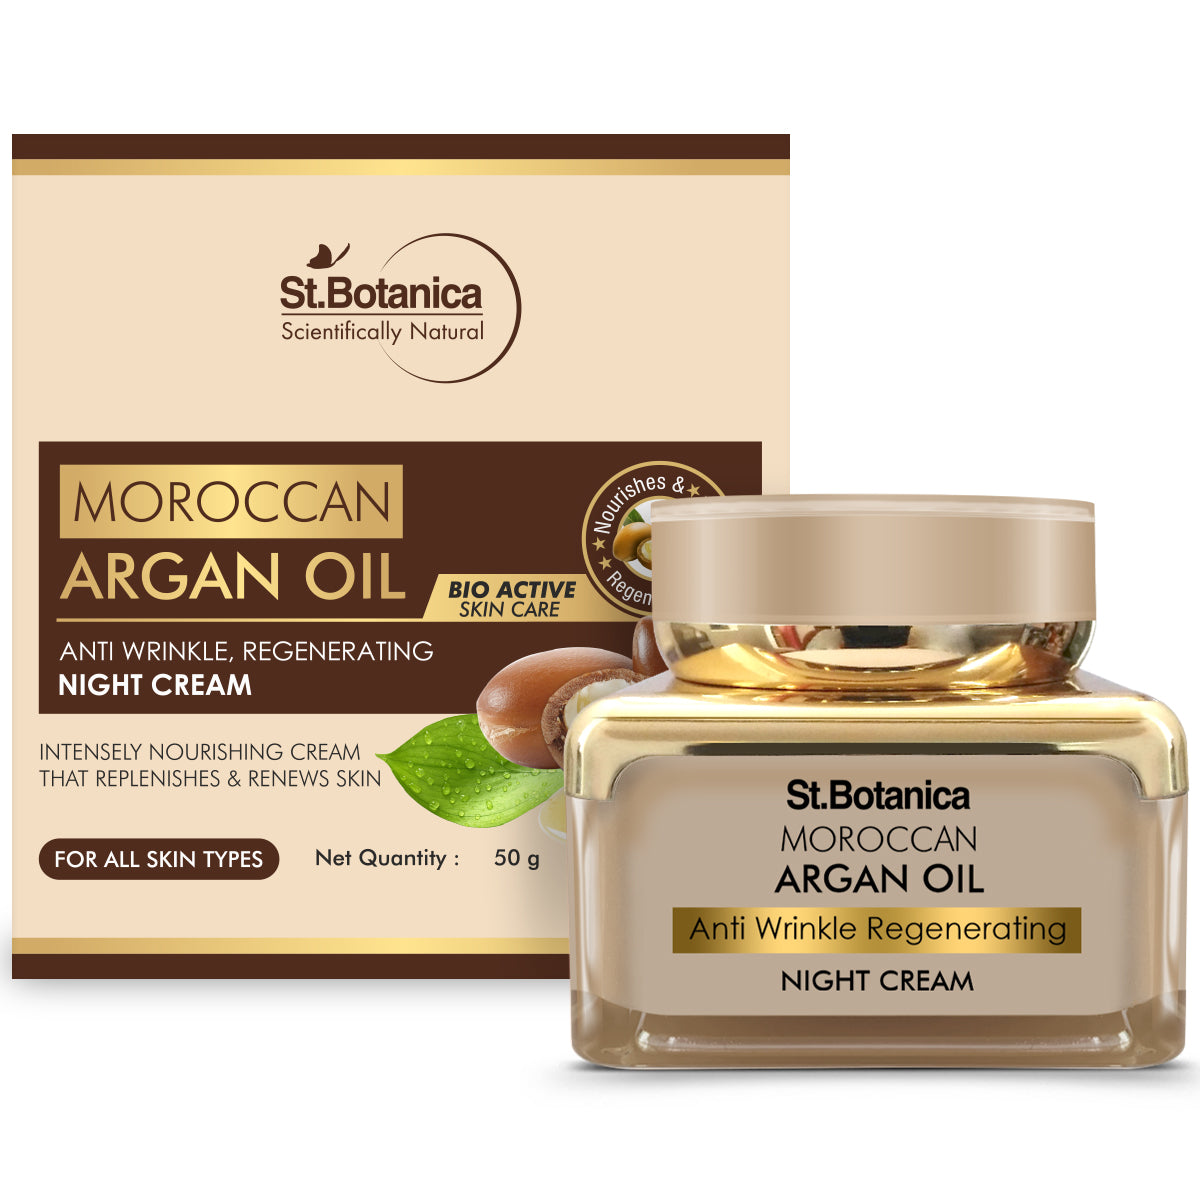 St.Botanica Moroccan Argan Oil Anti Wrinkle Regenerating Night Cream, 50g